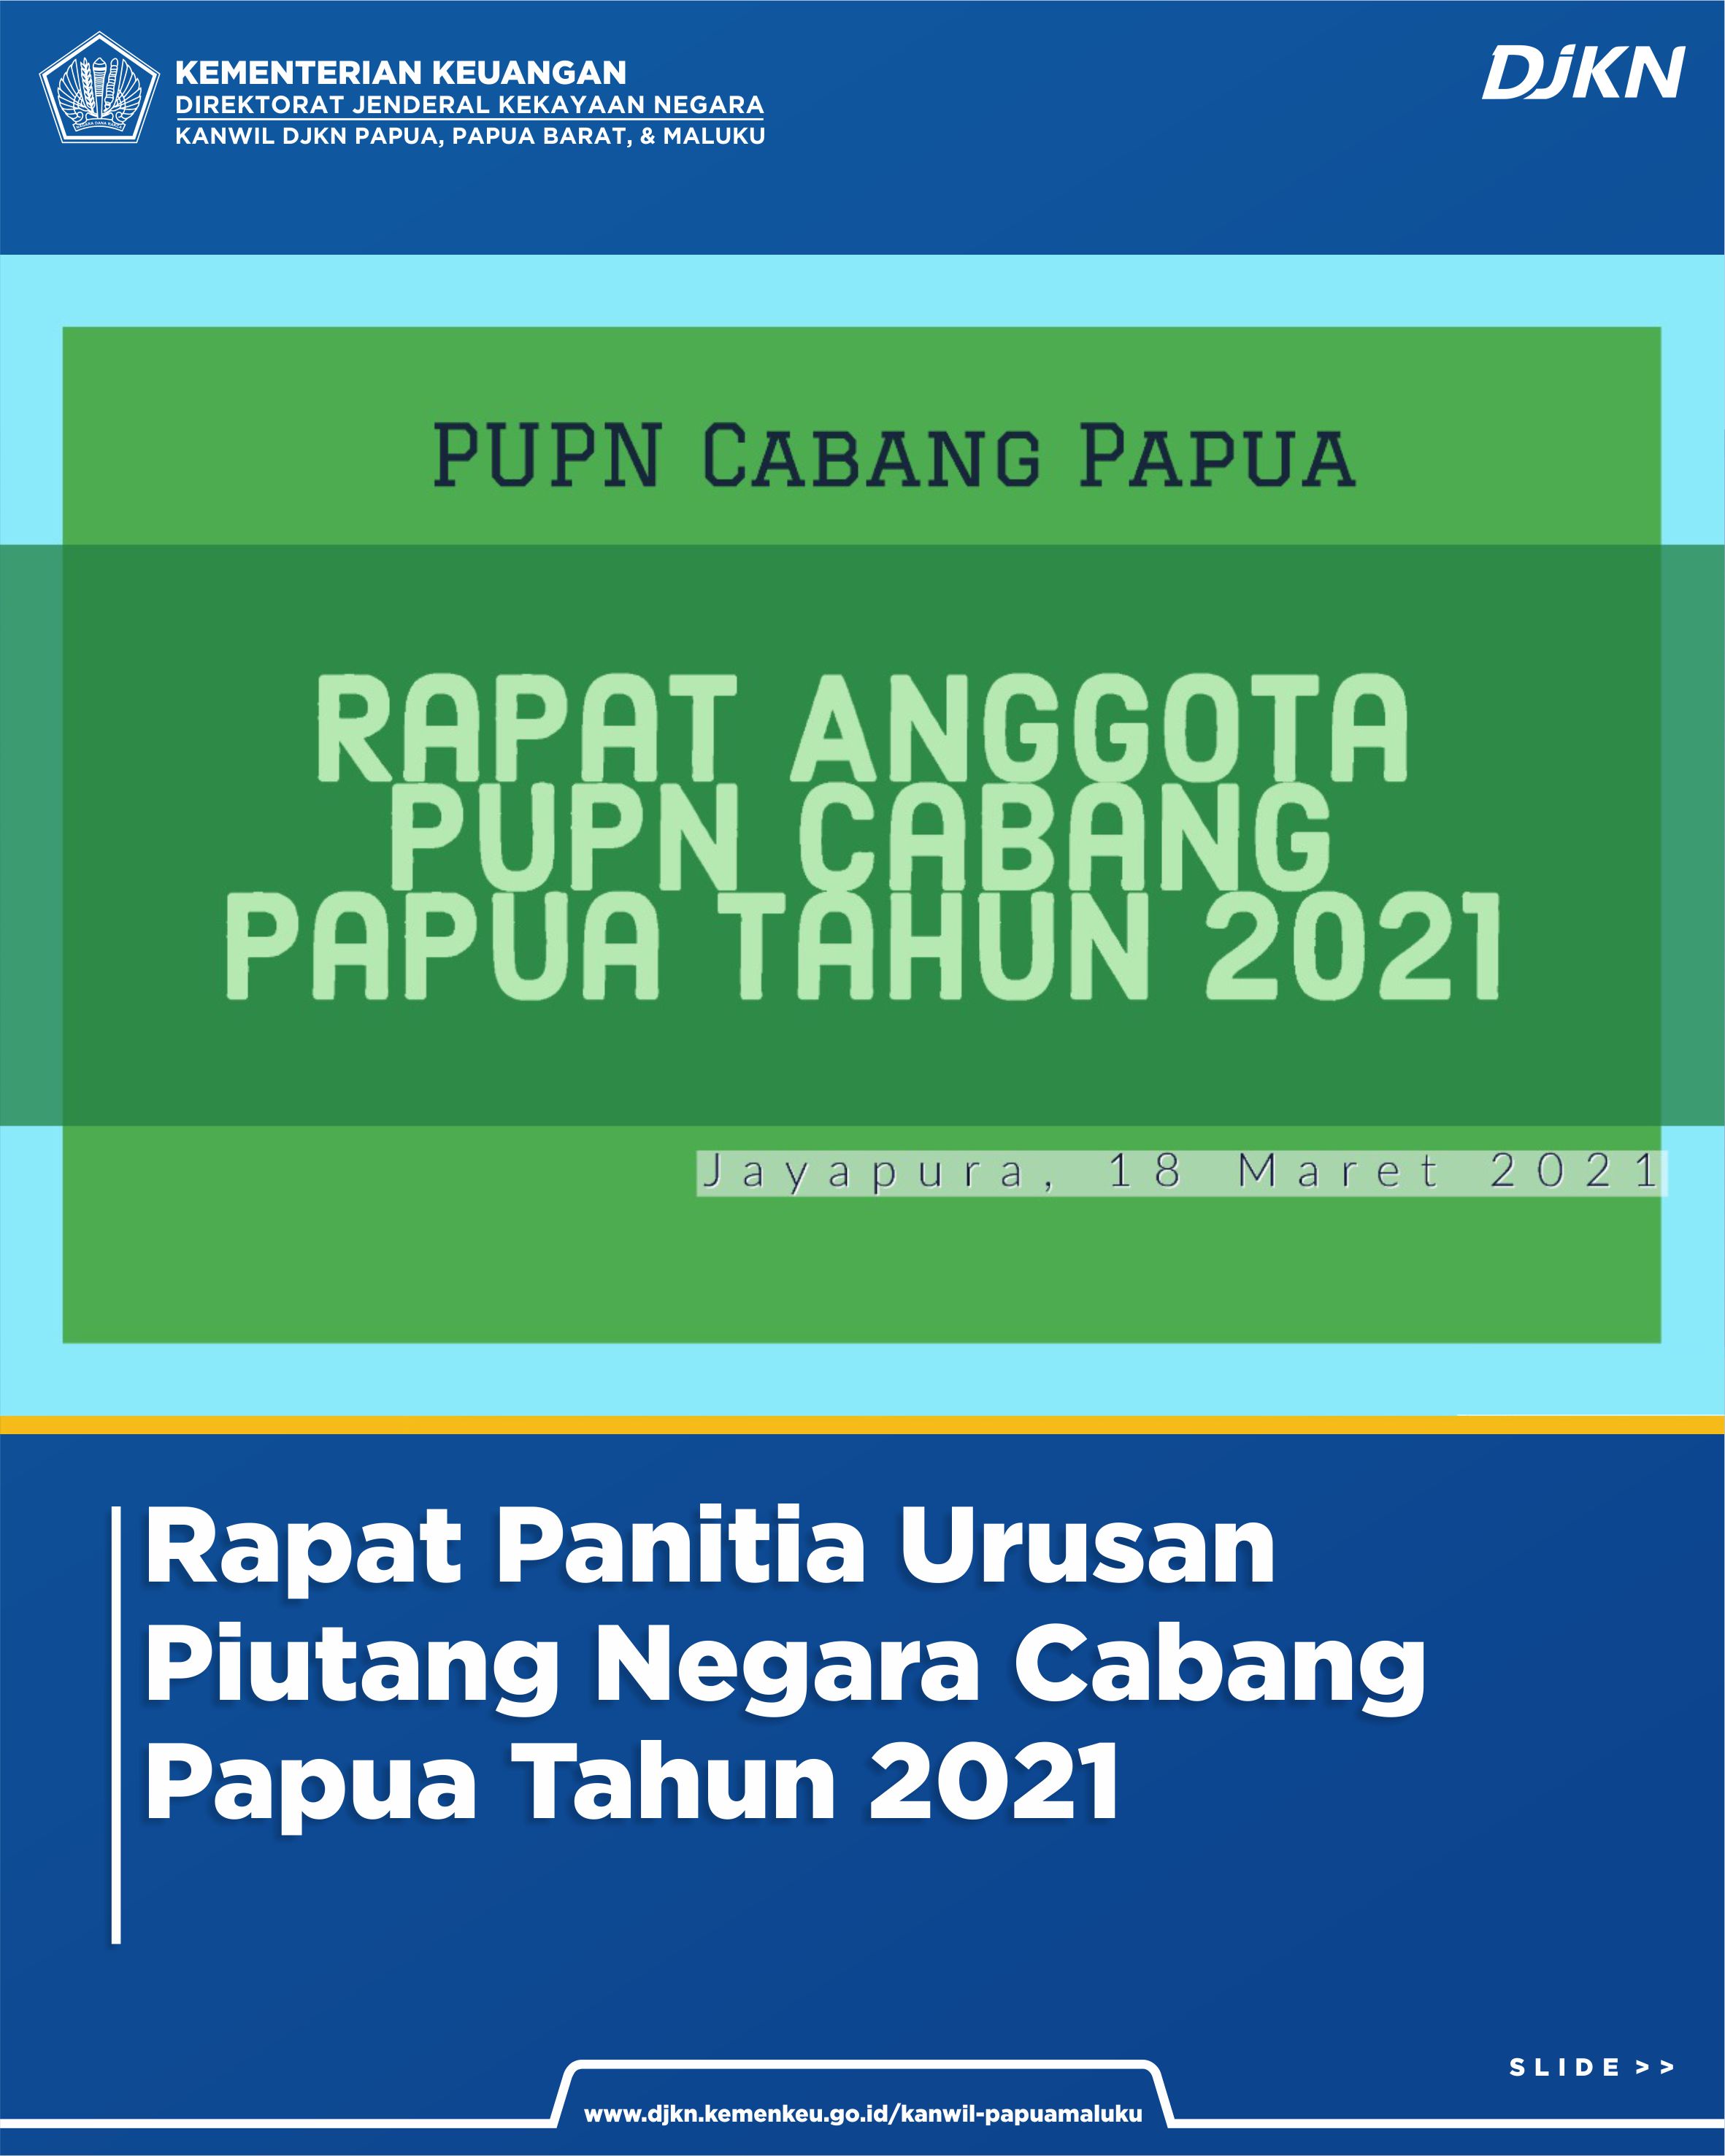 Rapat Anggota PUPN Cabang Papua Tahun 2021